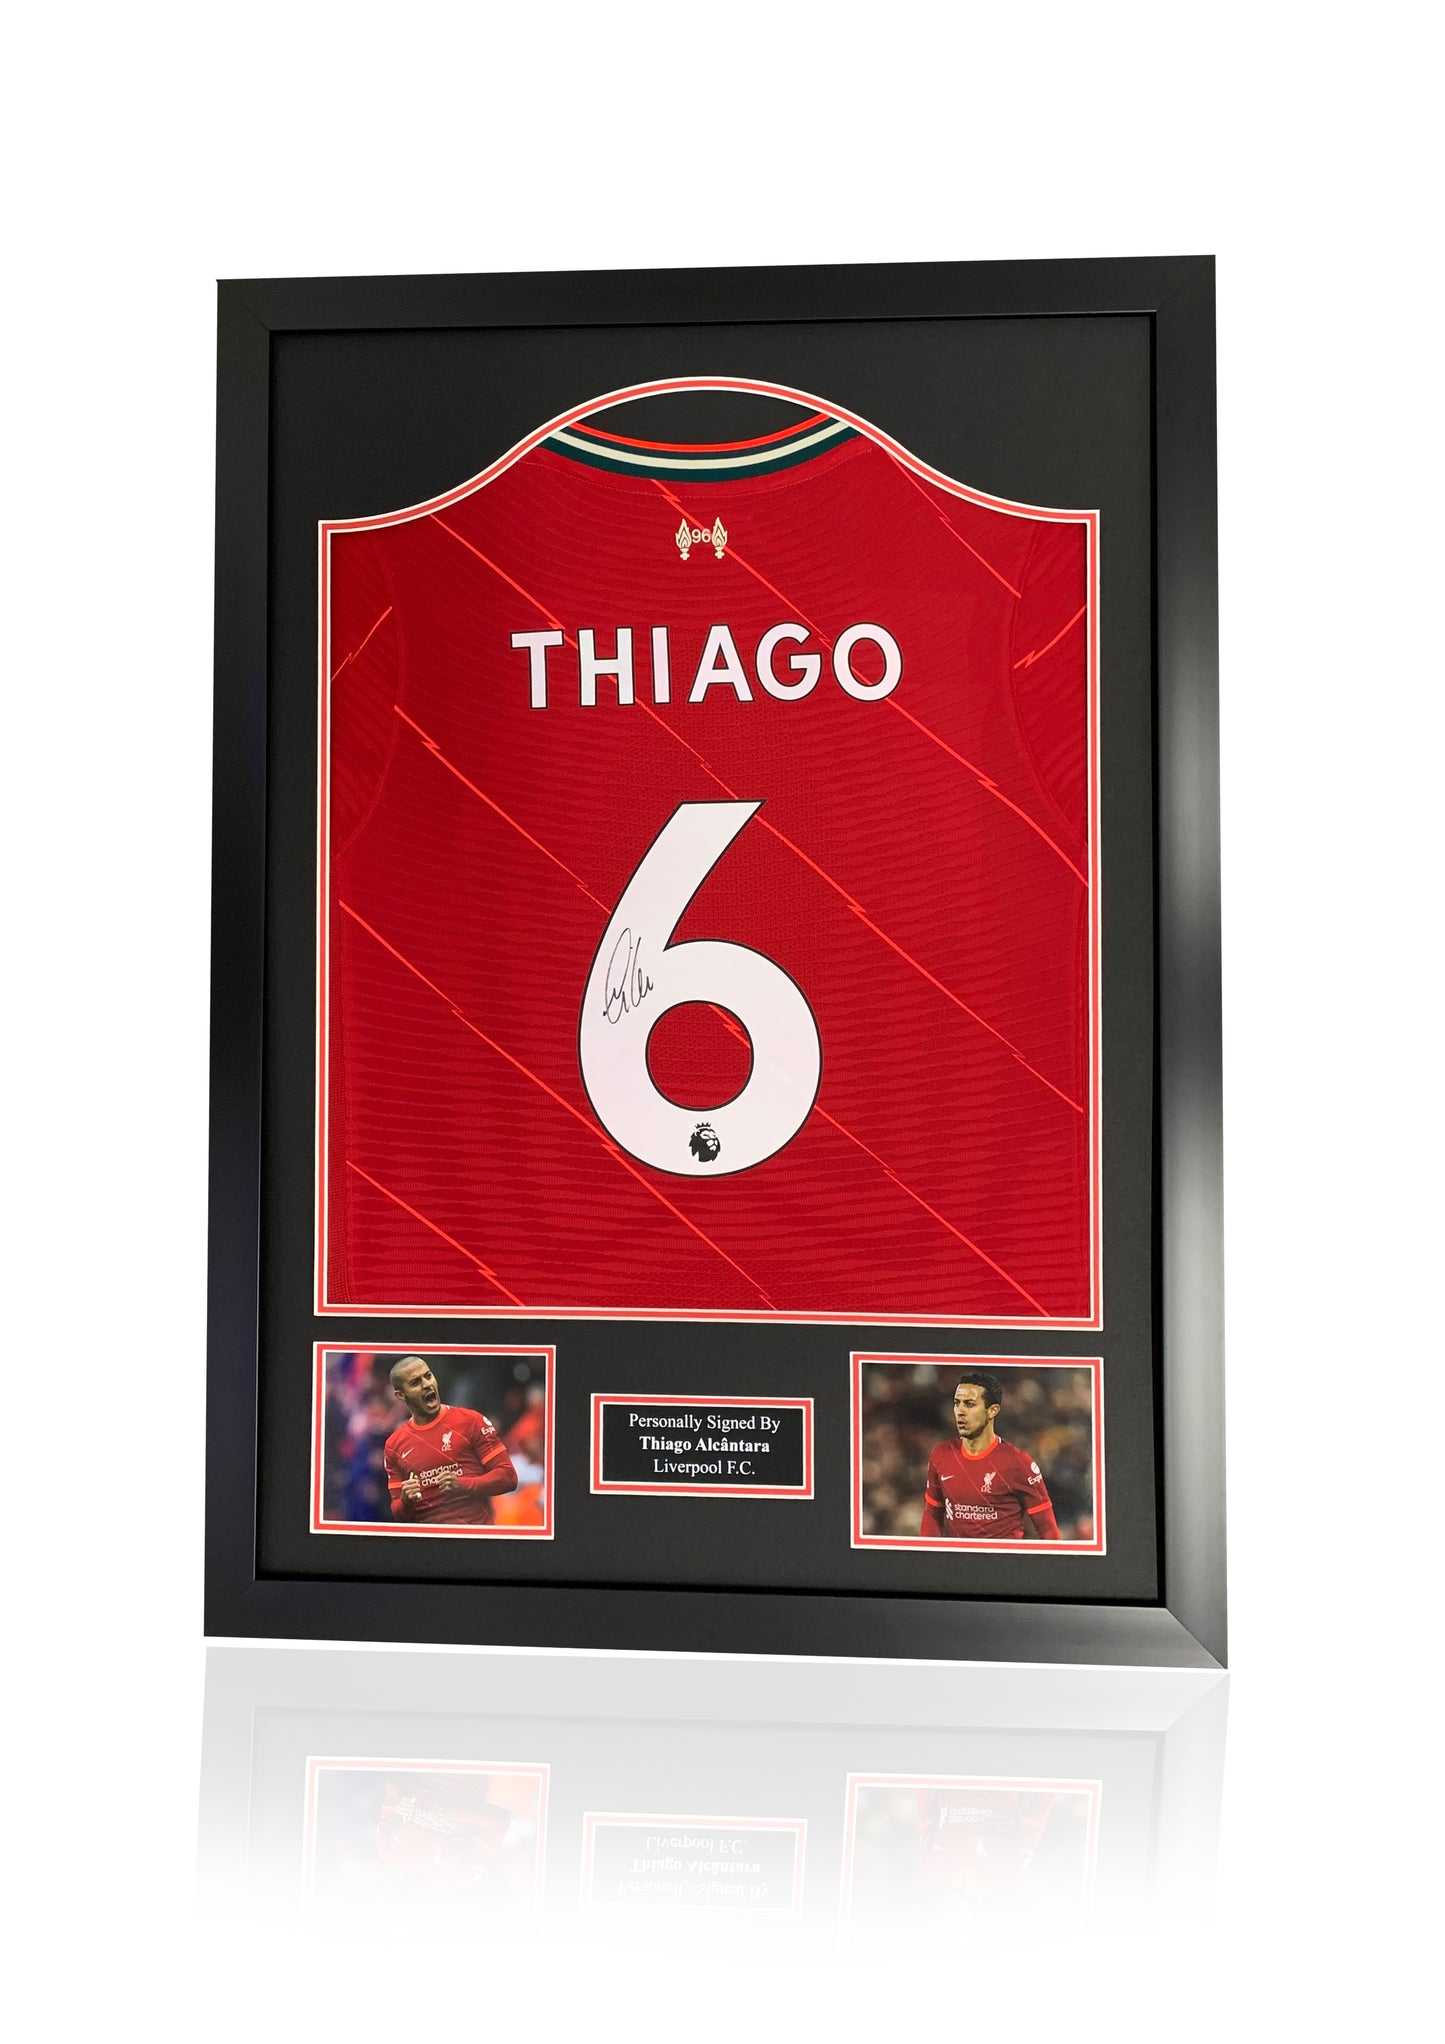 Thiago Liverpool FC framed signed shirt